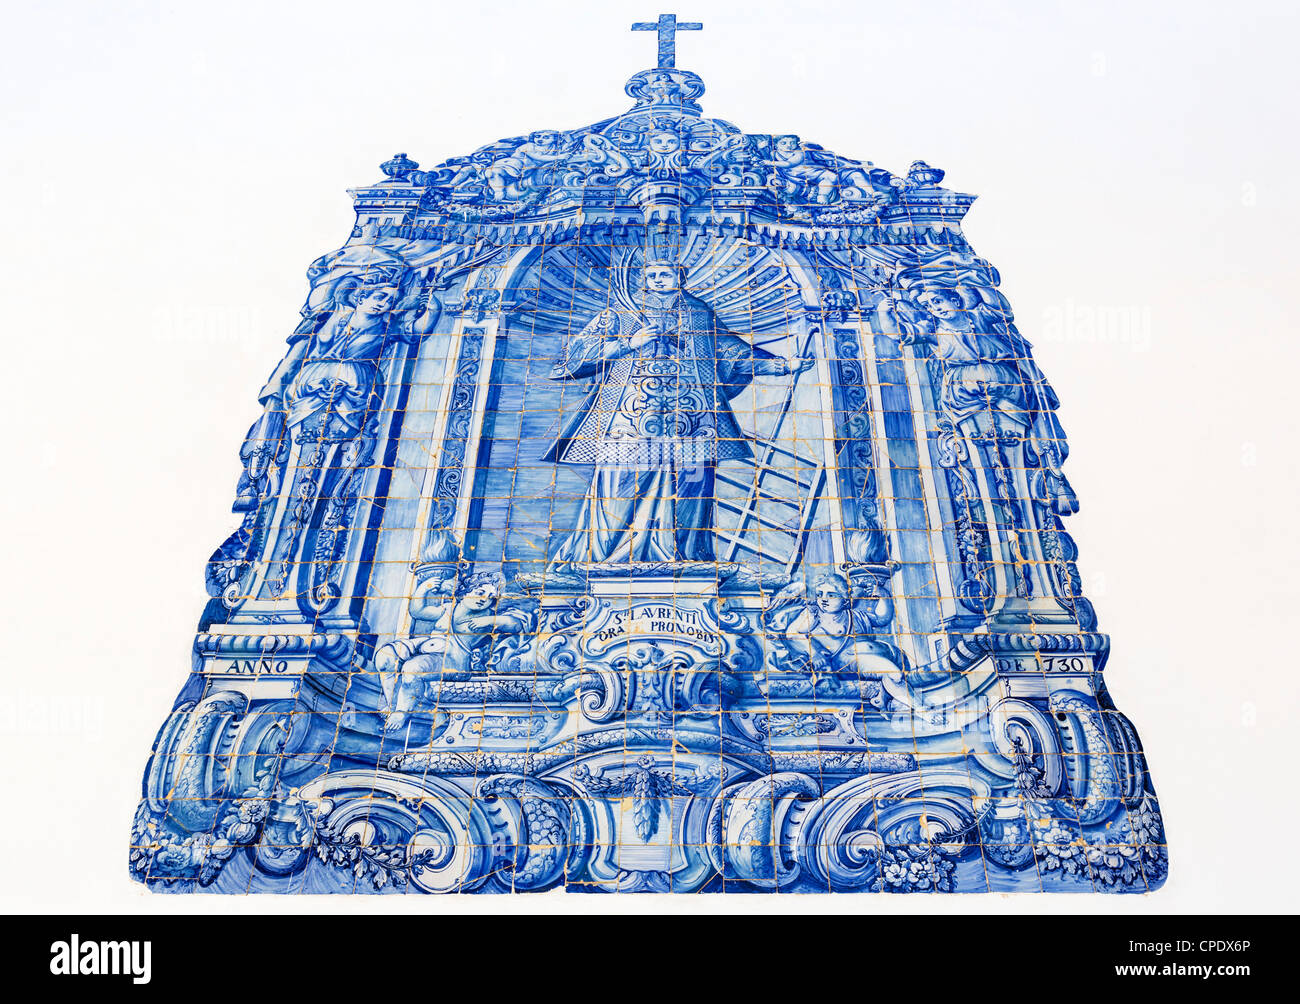 Mosaik gefliest Darstellung Sao Laurenco (St. Laurence) an der Wand der 18thC Kirche Sao Laurenco, Almancil, Algarve, Portugal Stockfoto